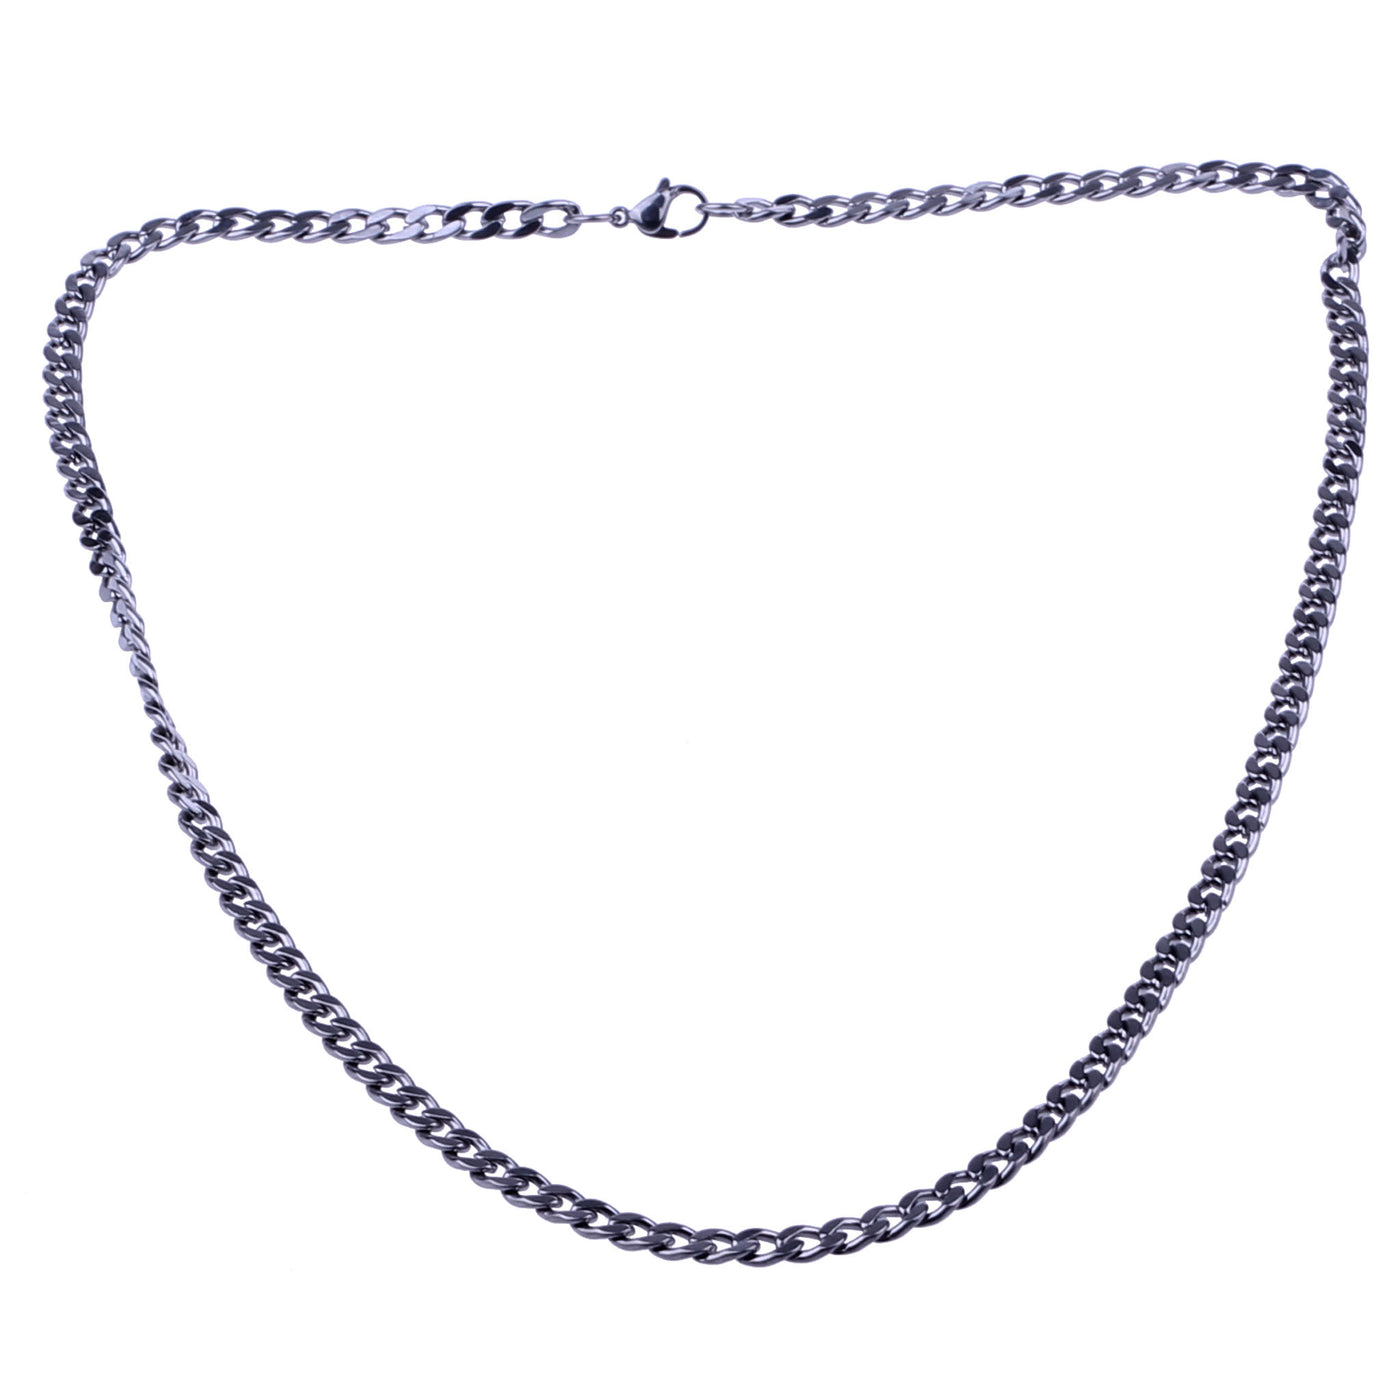 Steel chain 55cm